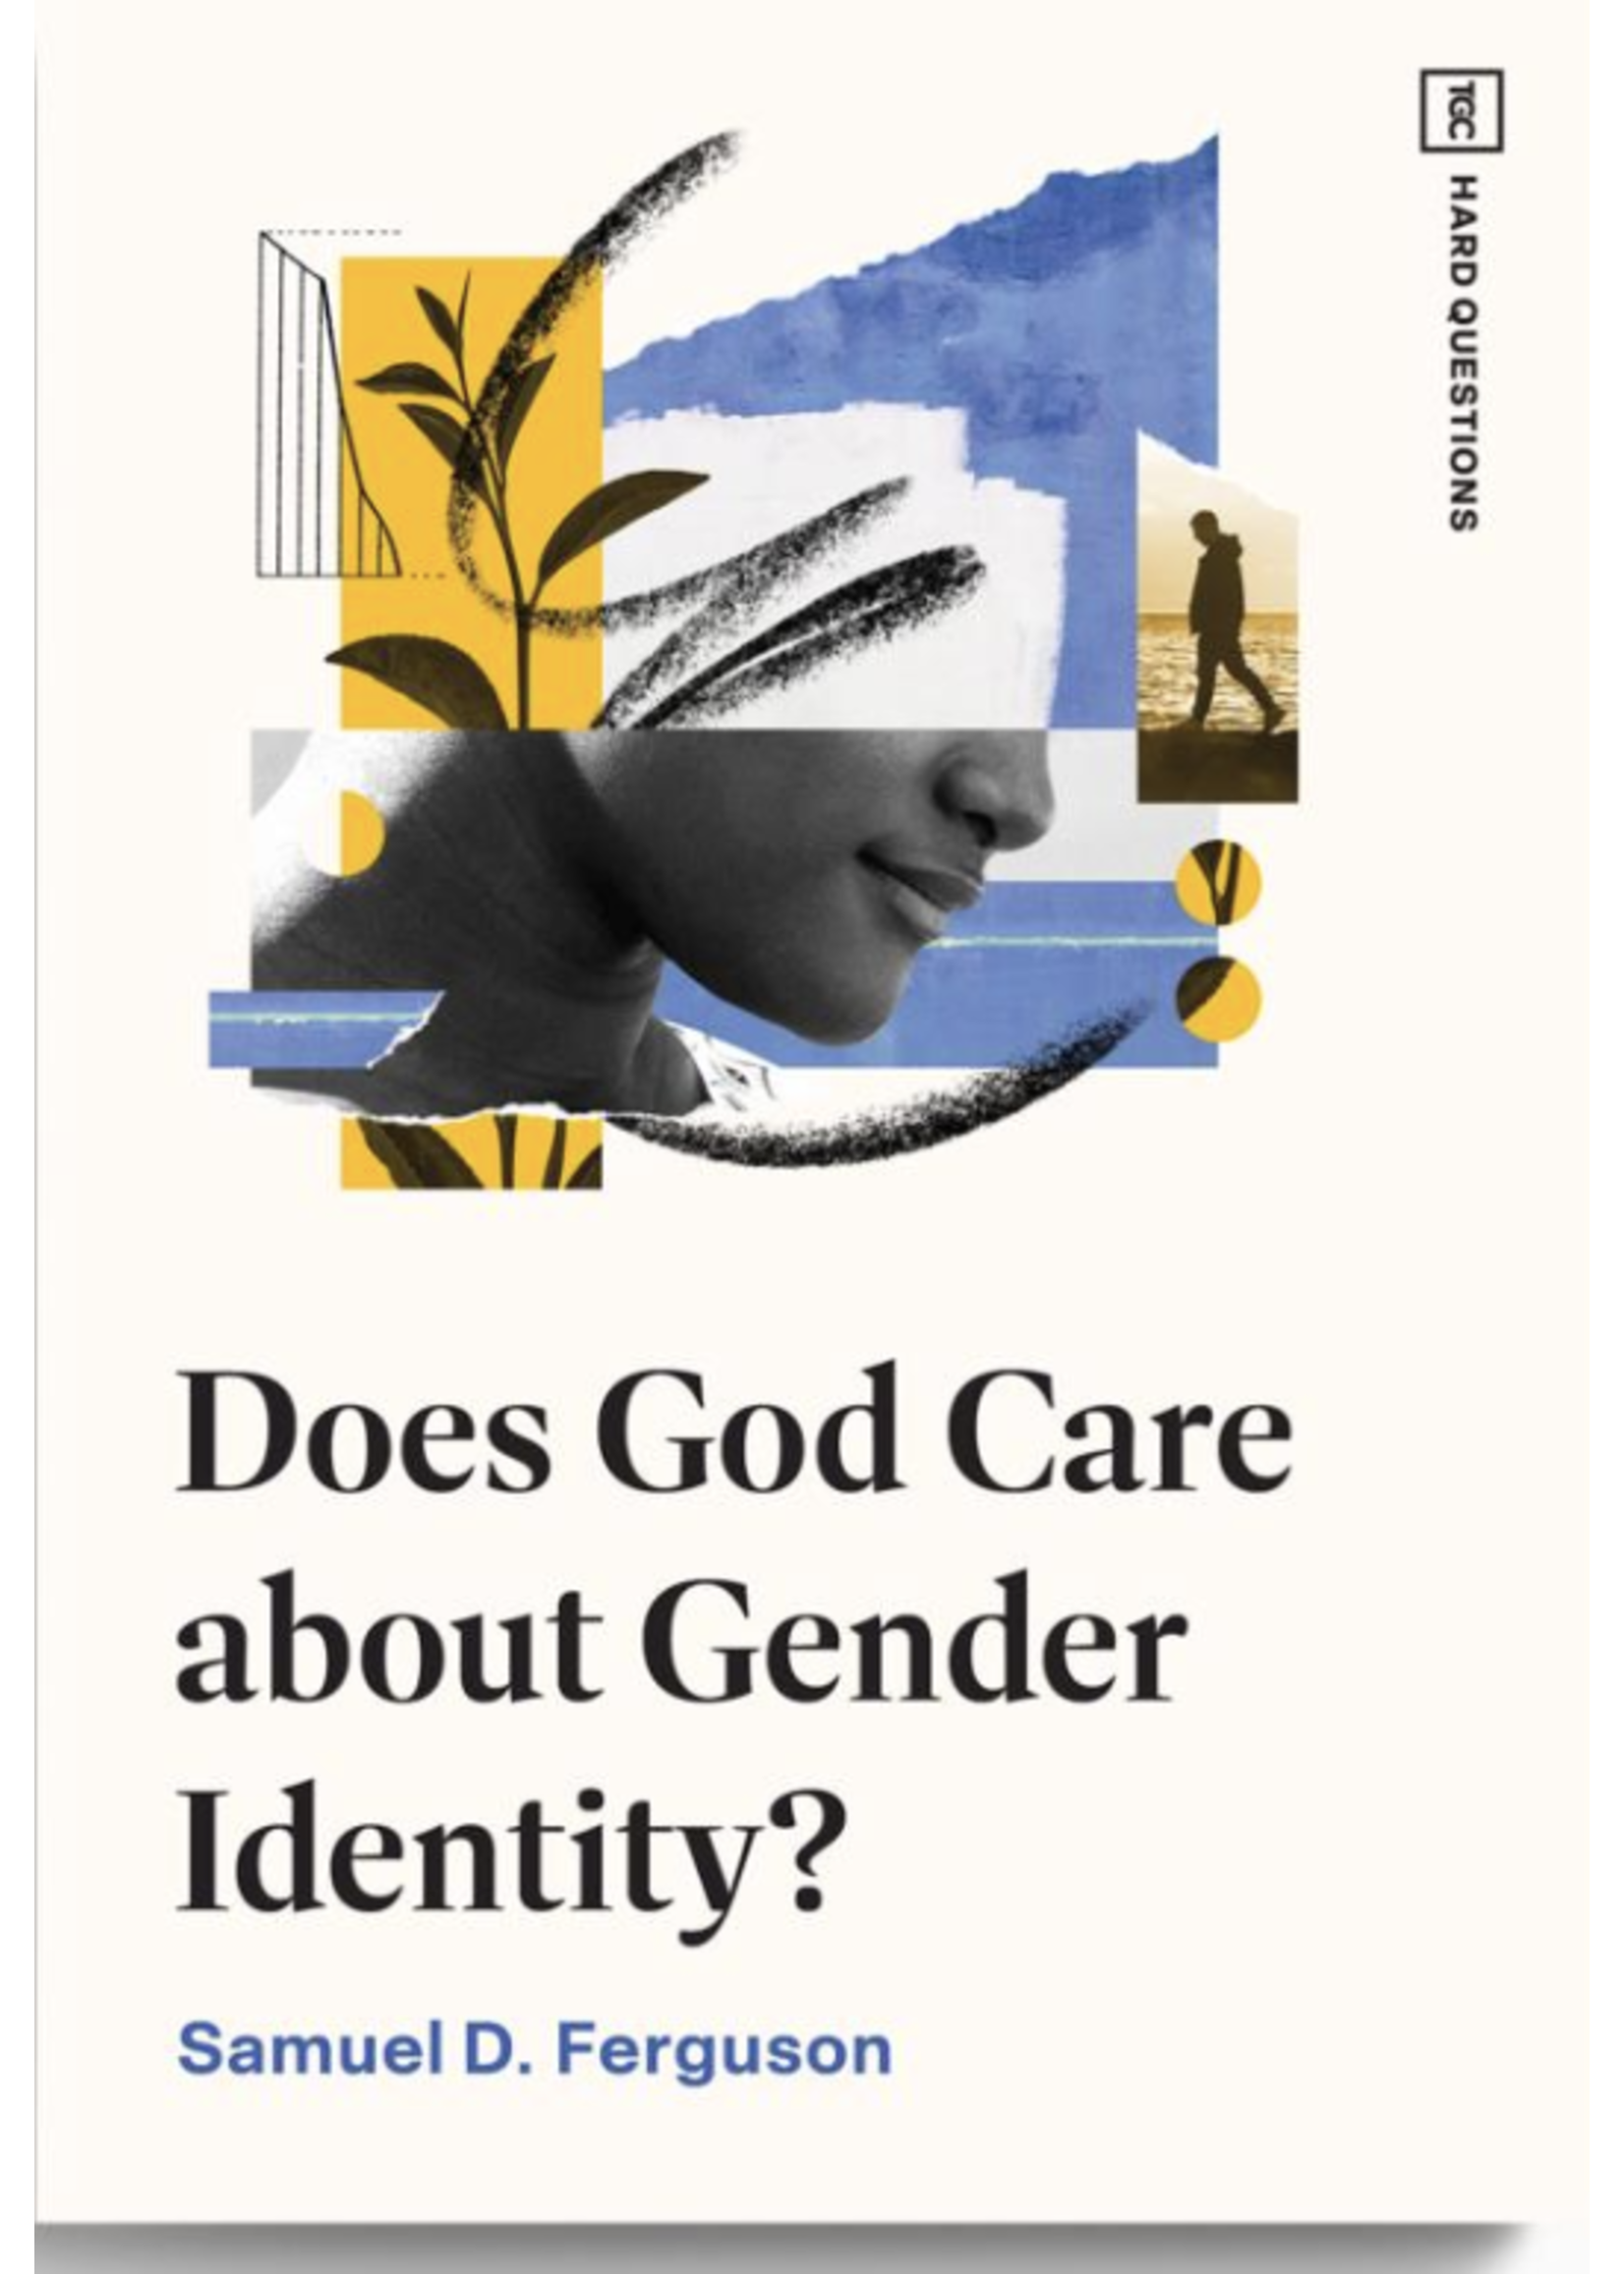 Does God Care about Gender Identity? [Samuel D. Ferguson]